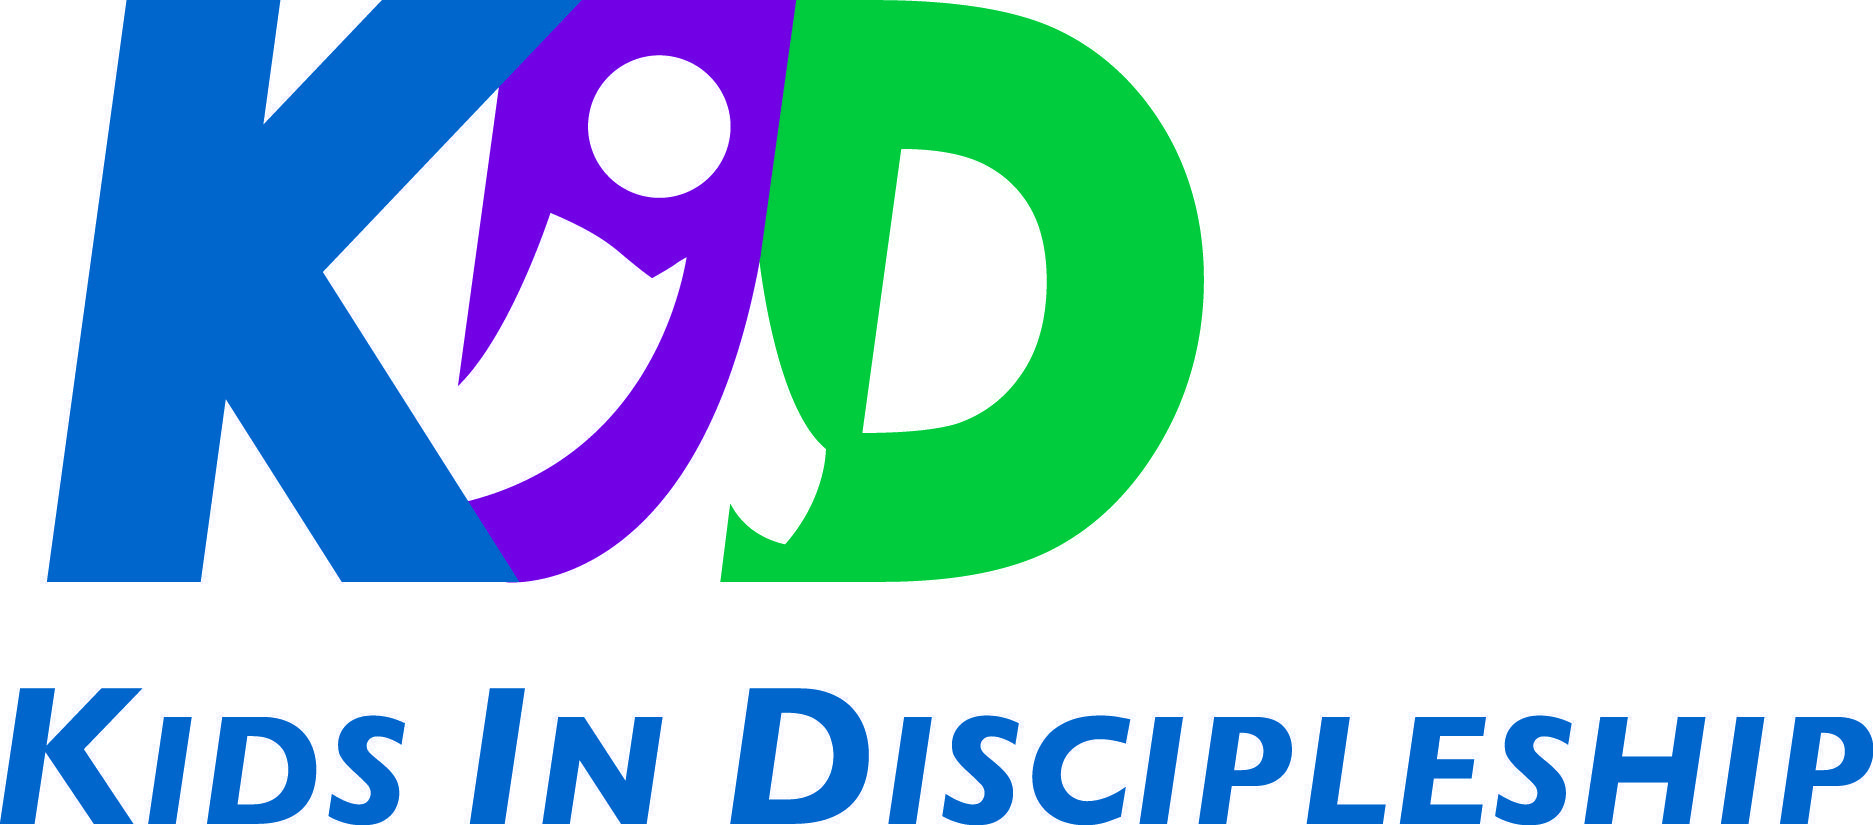 Discipleship Logo - Kids in Discipleship Logo - Logo Design by Interactive ID | Logo ...